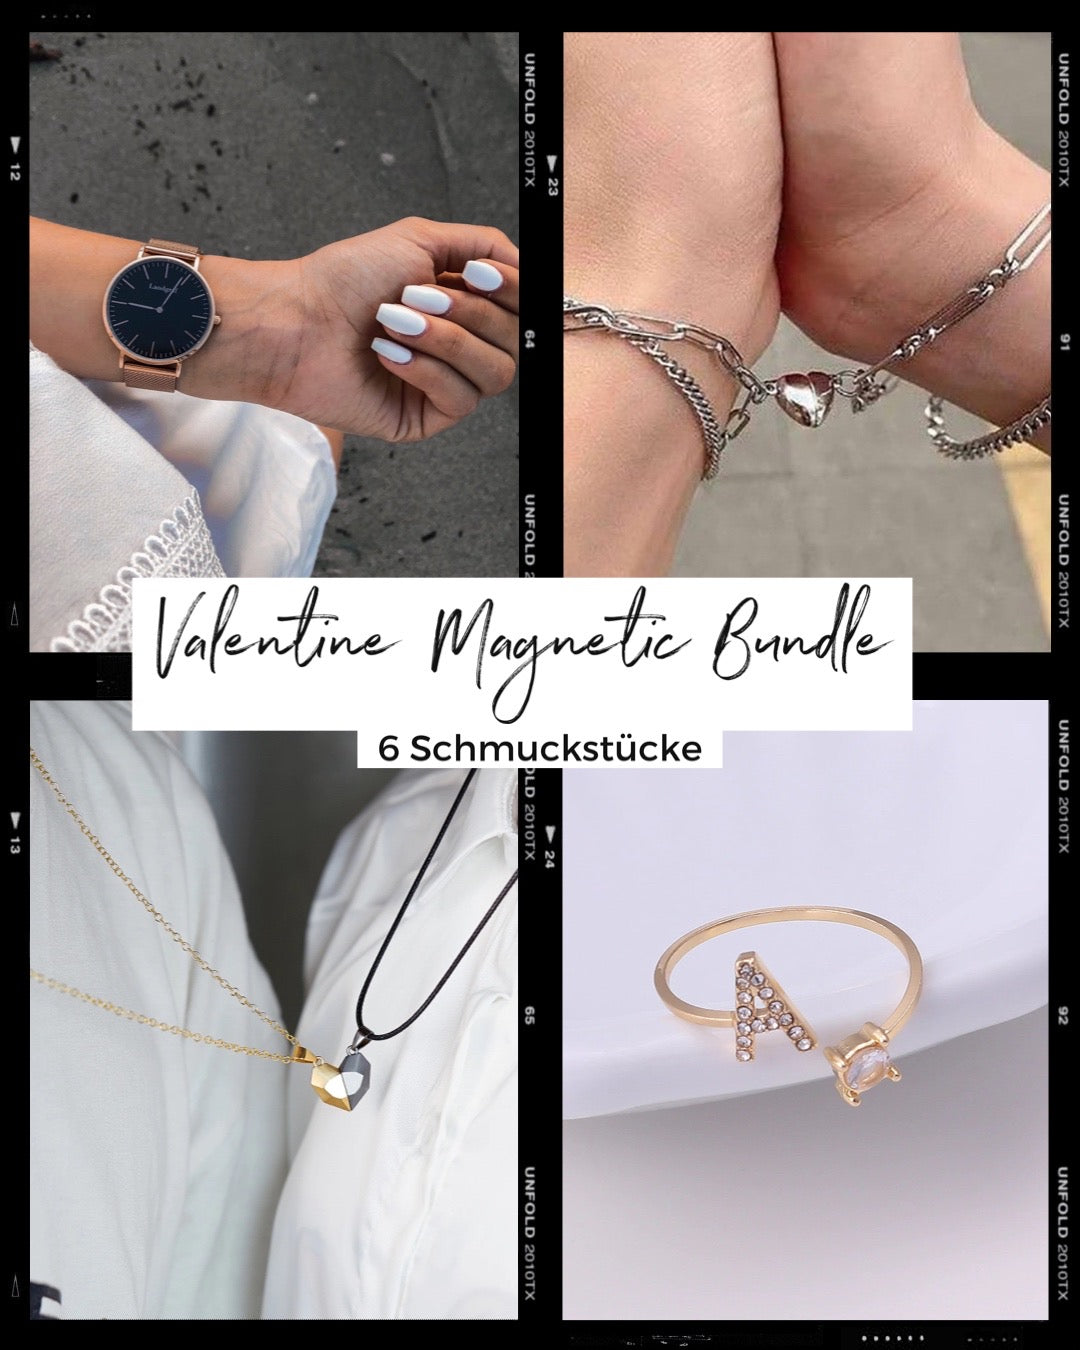 Valentine Magnetic Bundle (6 Schmuckstücke) I Model Edition